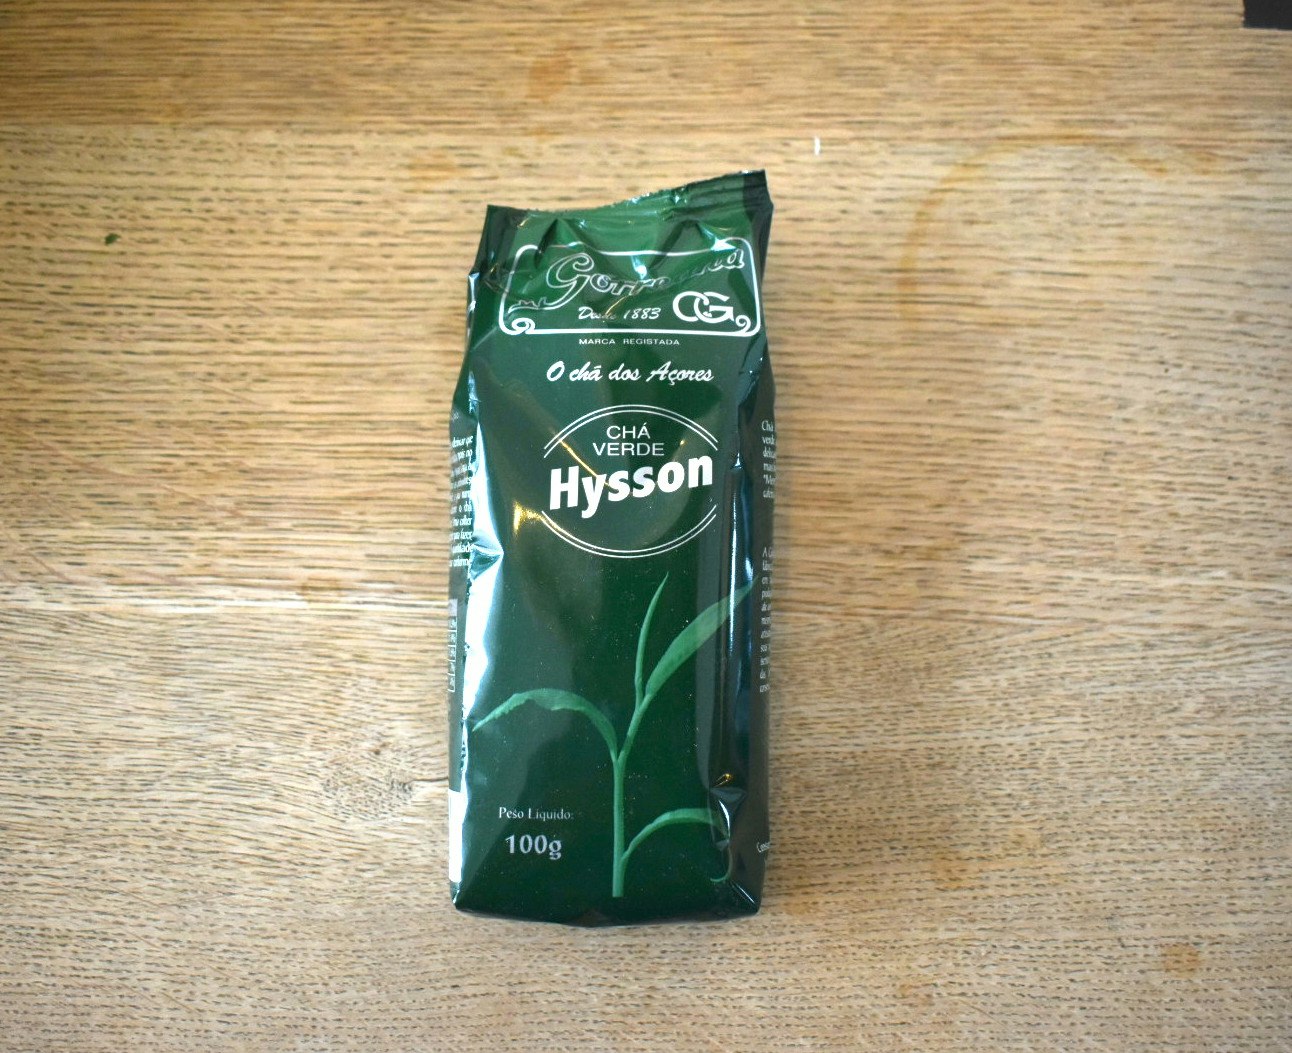 Gorreana Hysson grönt te 100g från Azorerna